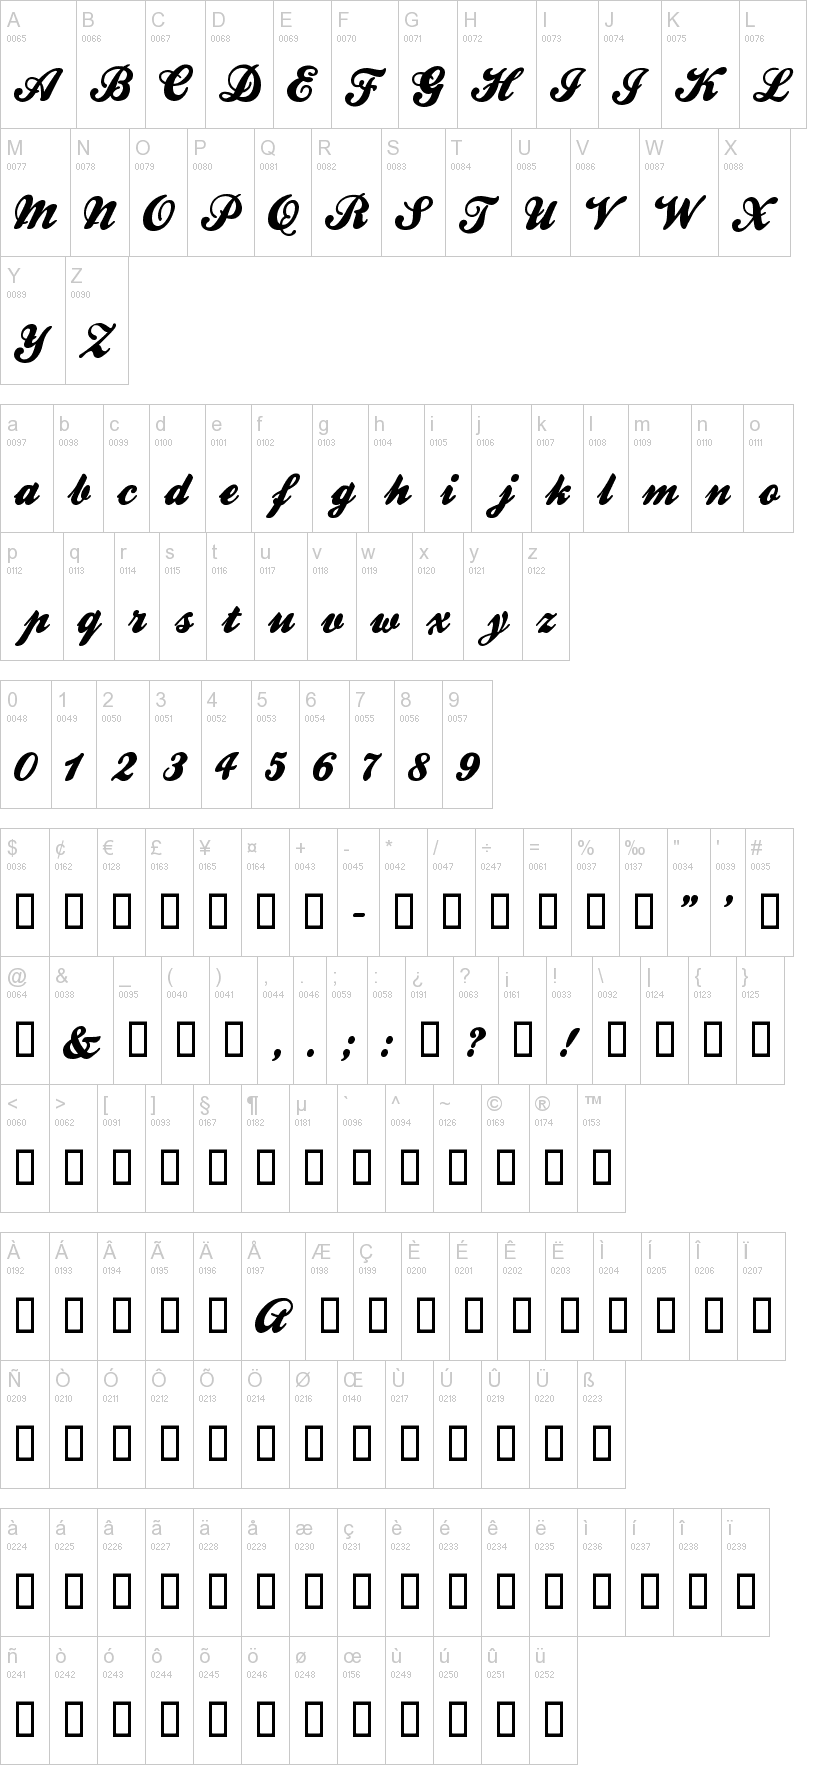 AdineKirnbergScript type 1 PS font for Adobe Type Manager.